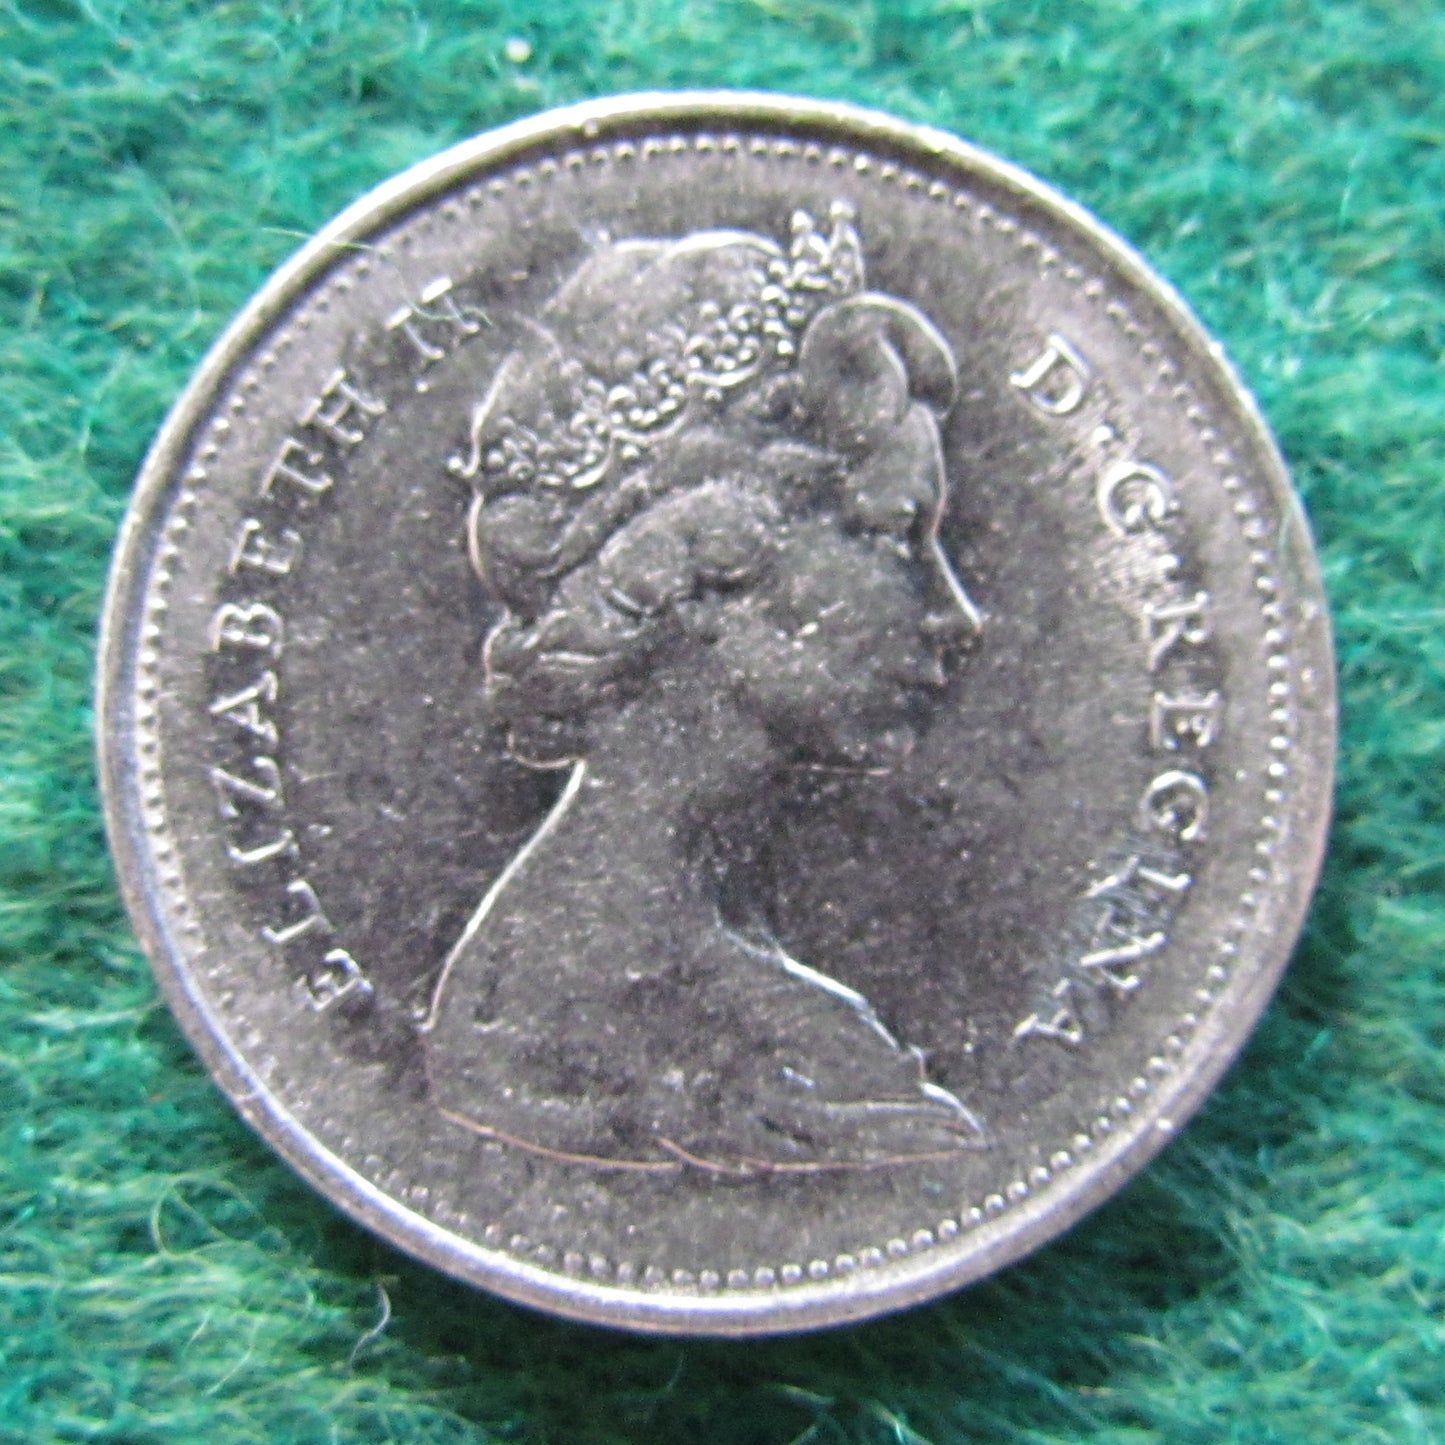 Canada 1968 25 Cent Queen Elizabeth II Coin - Circulated